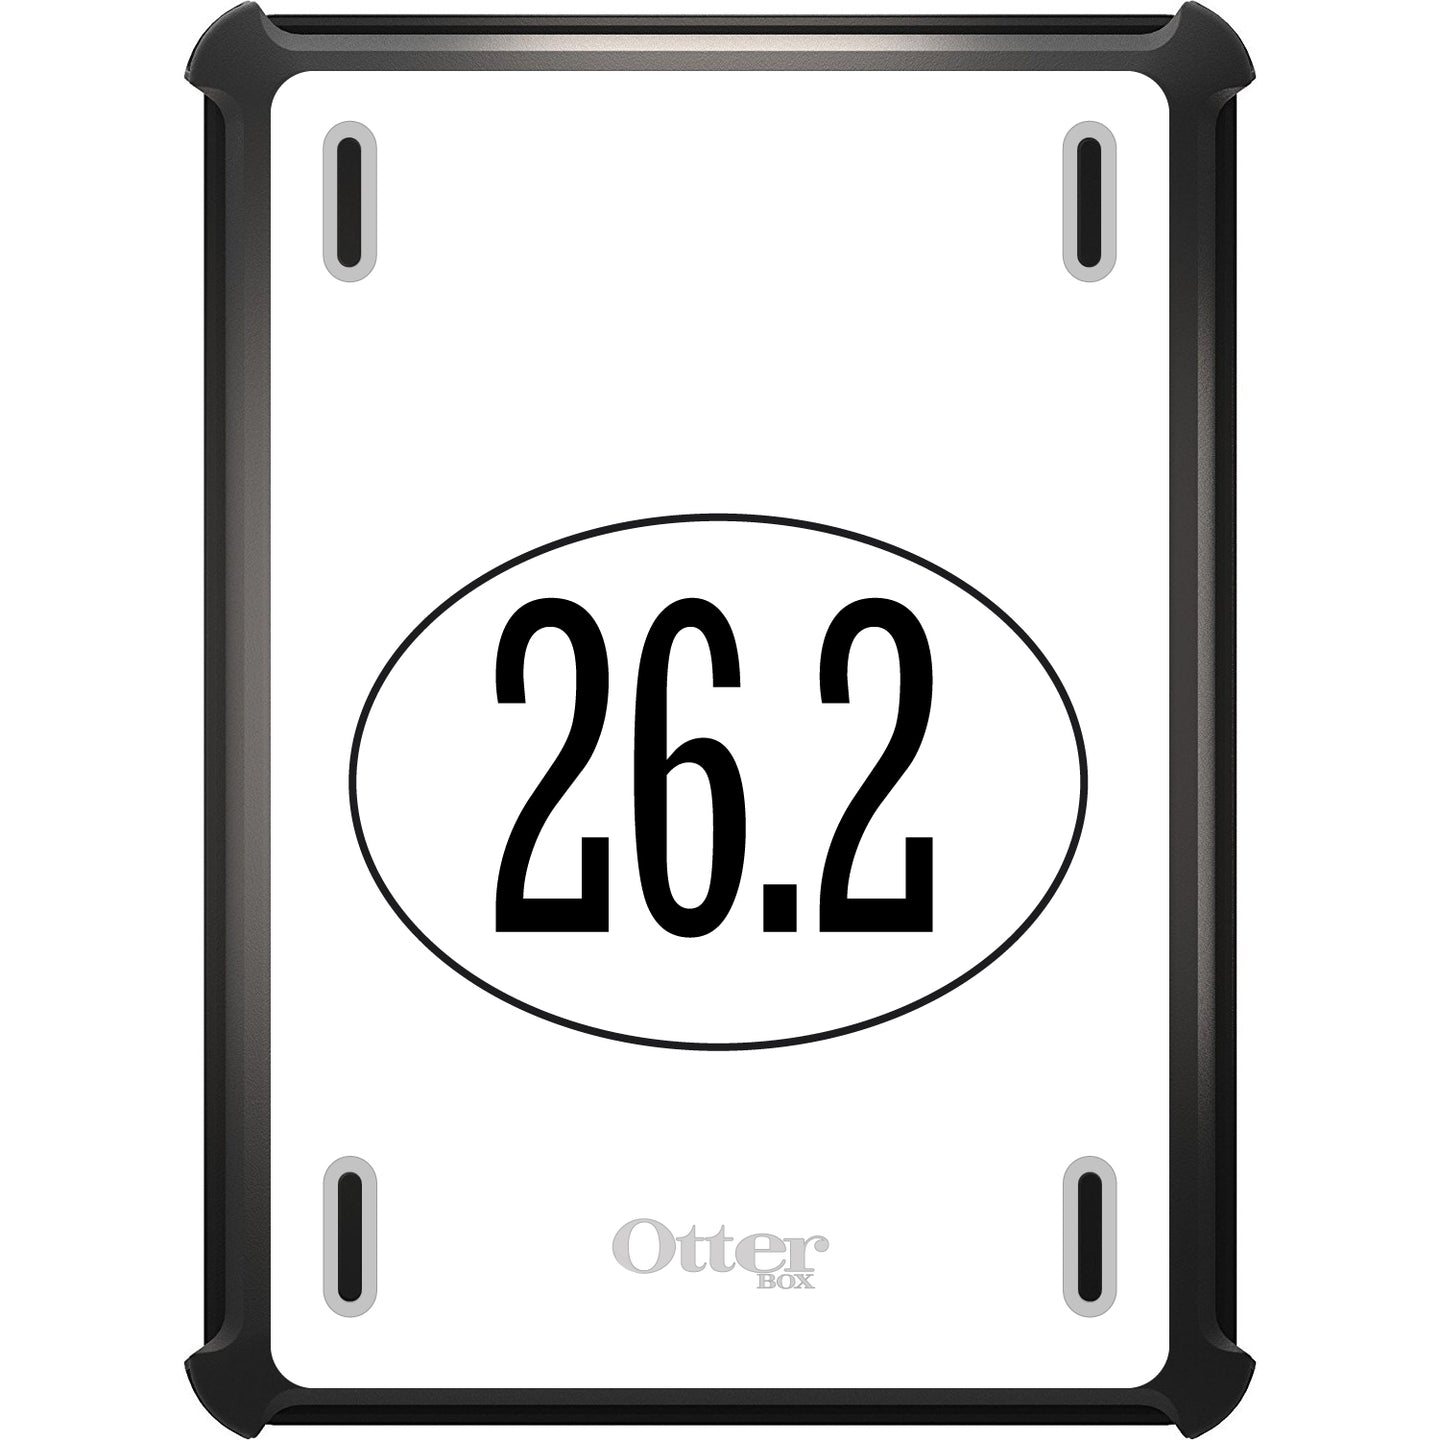 DistinctInk™ OtterBox Defender Series Case for Apple iPad / iPad Pro / iPad Air / iPad Mini - White 26.2 Oval Marathon Run